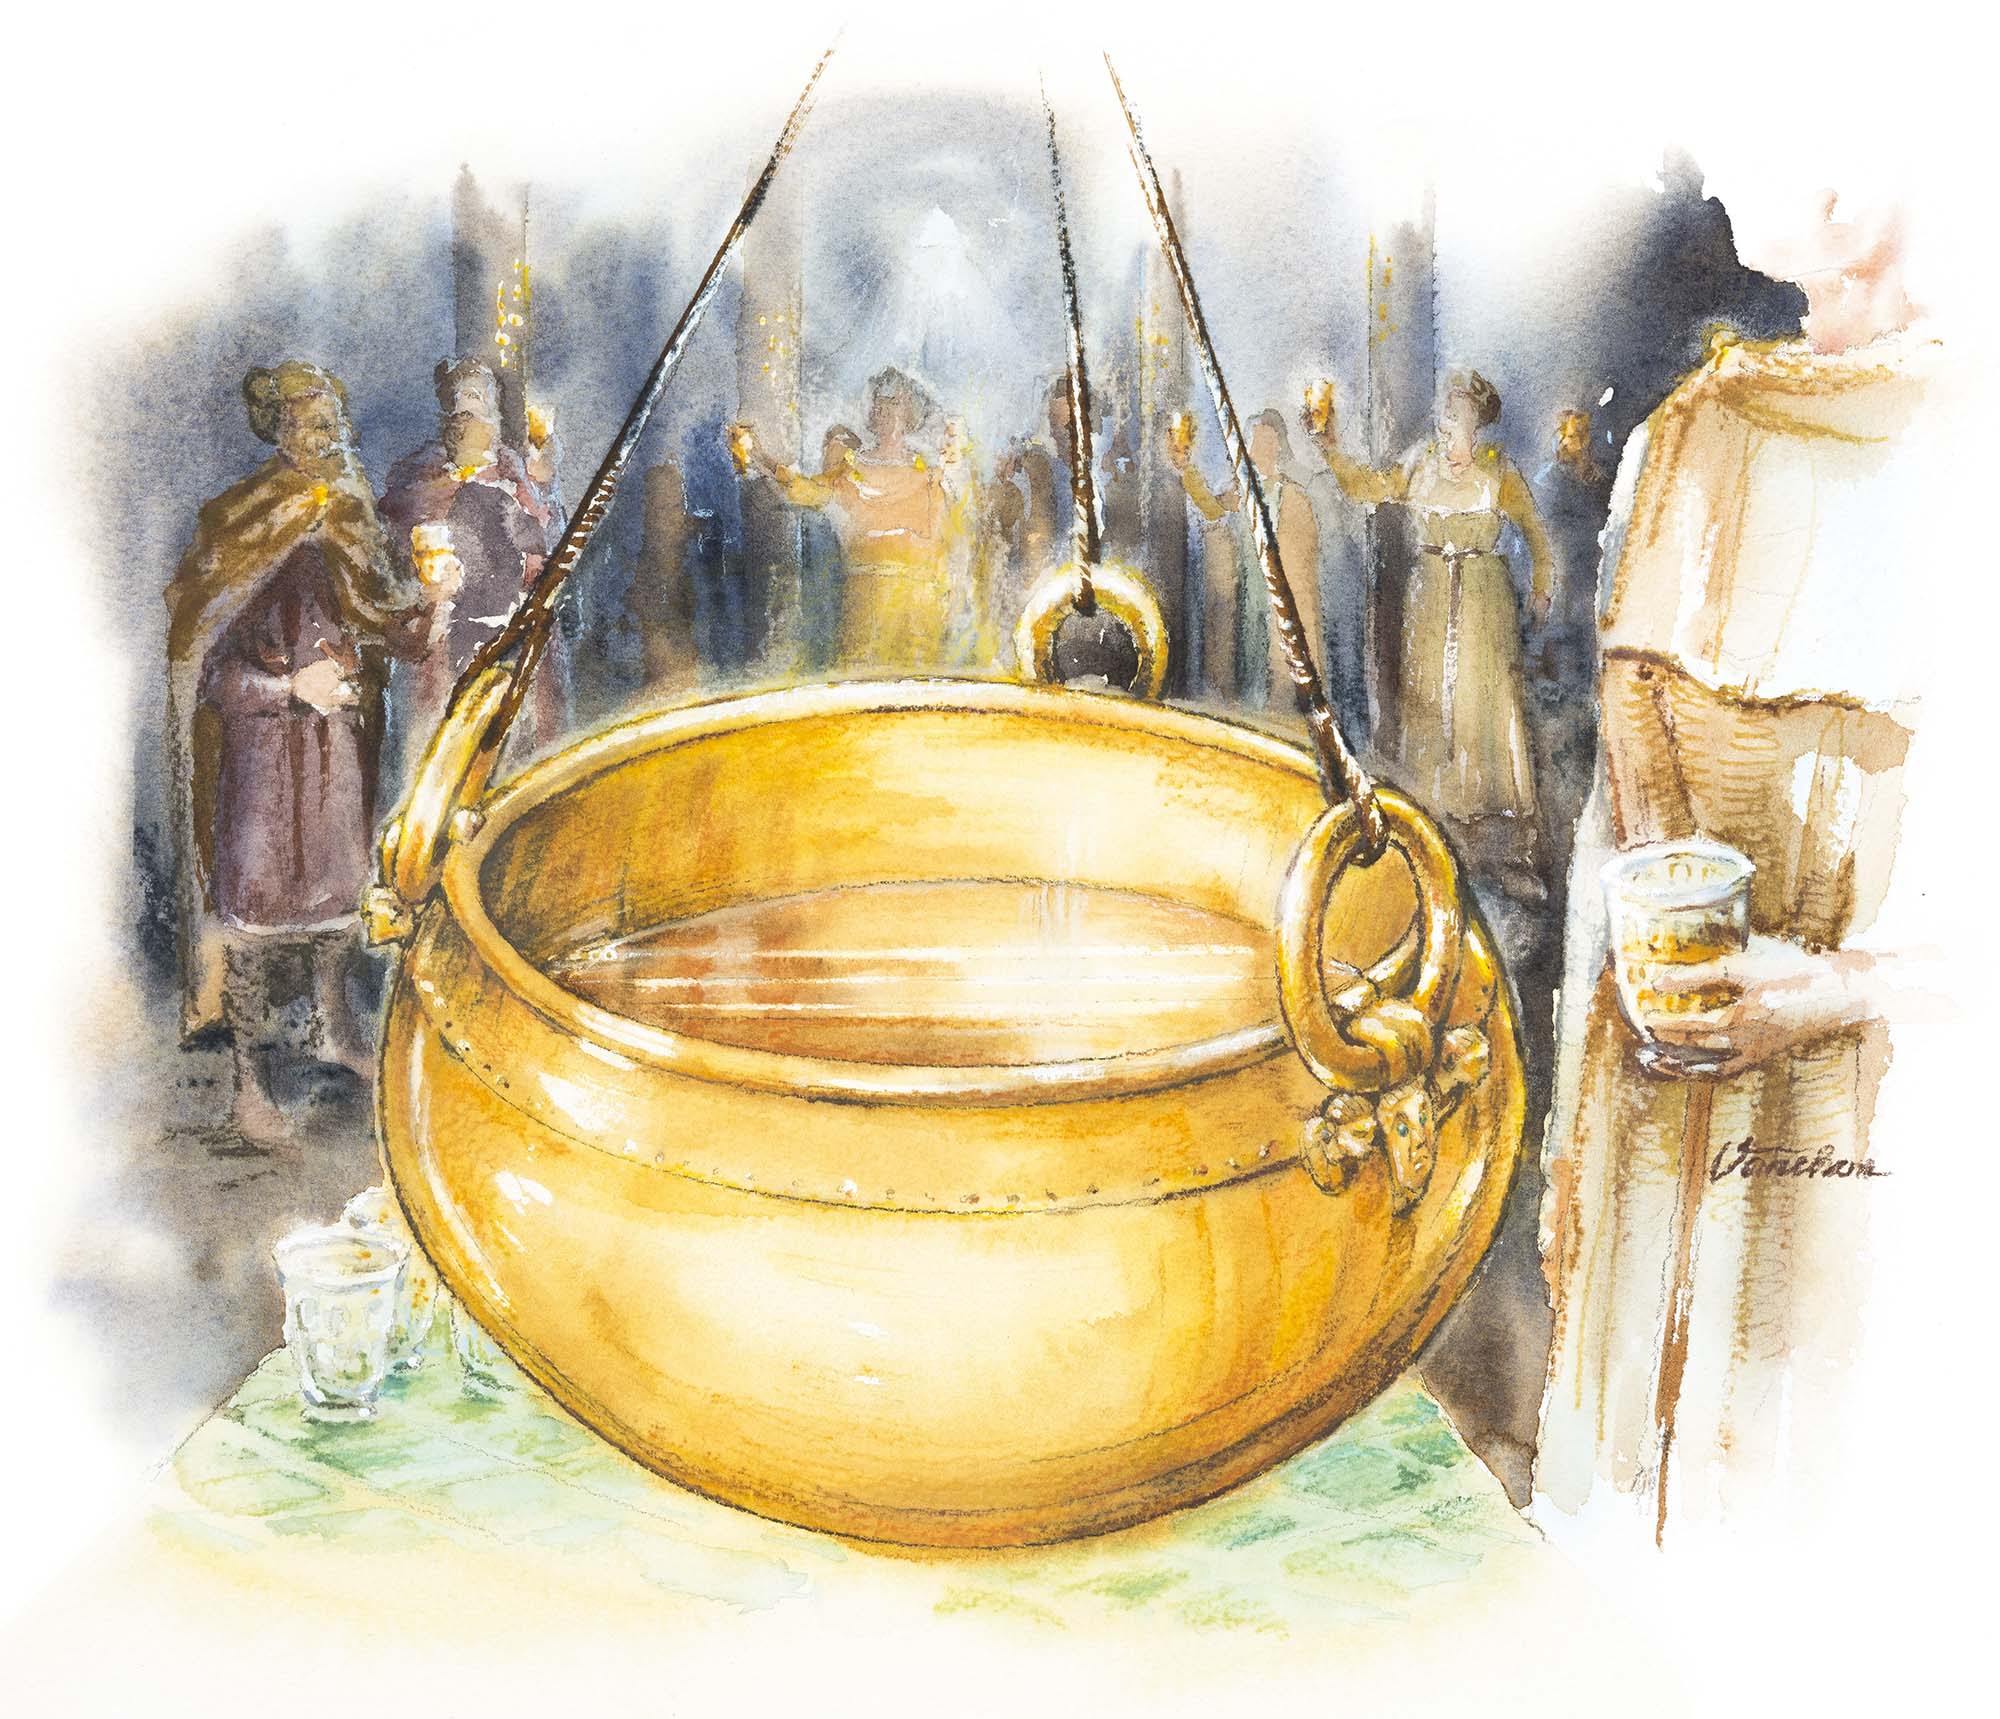 The bronze cauldron of Västra Vång (Client: Ronneby municipality)